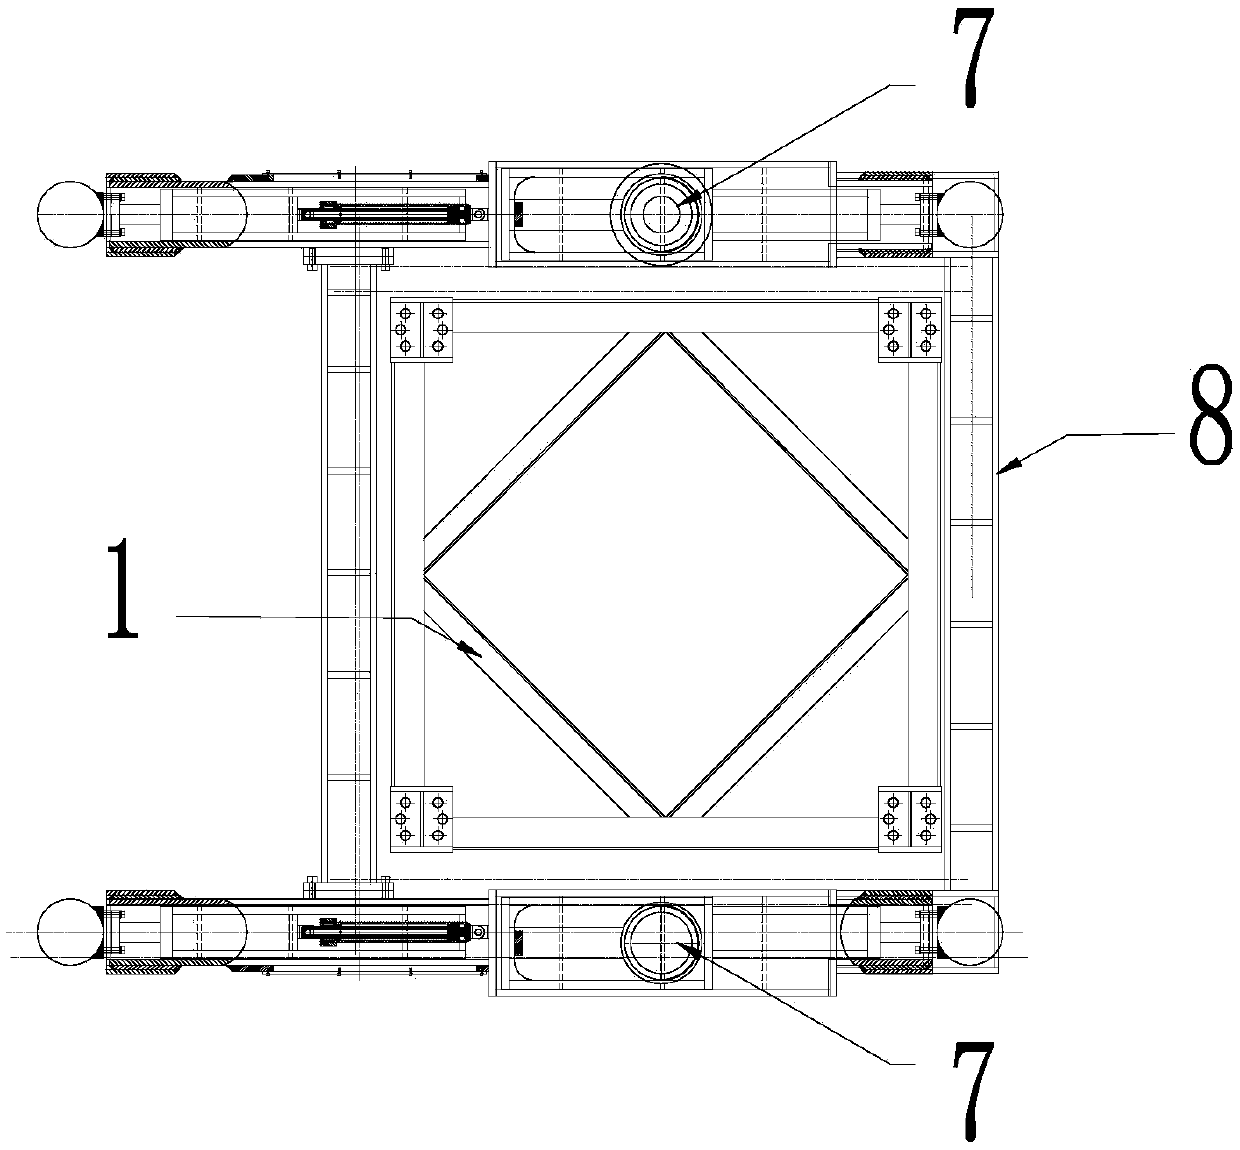 Internal climbing tower crane climbing method without using inverted beam method